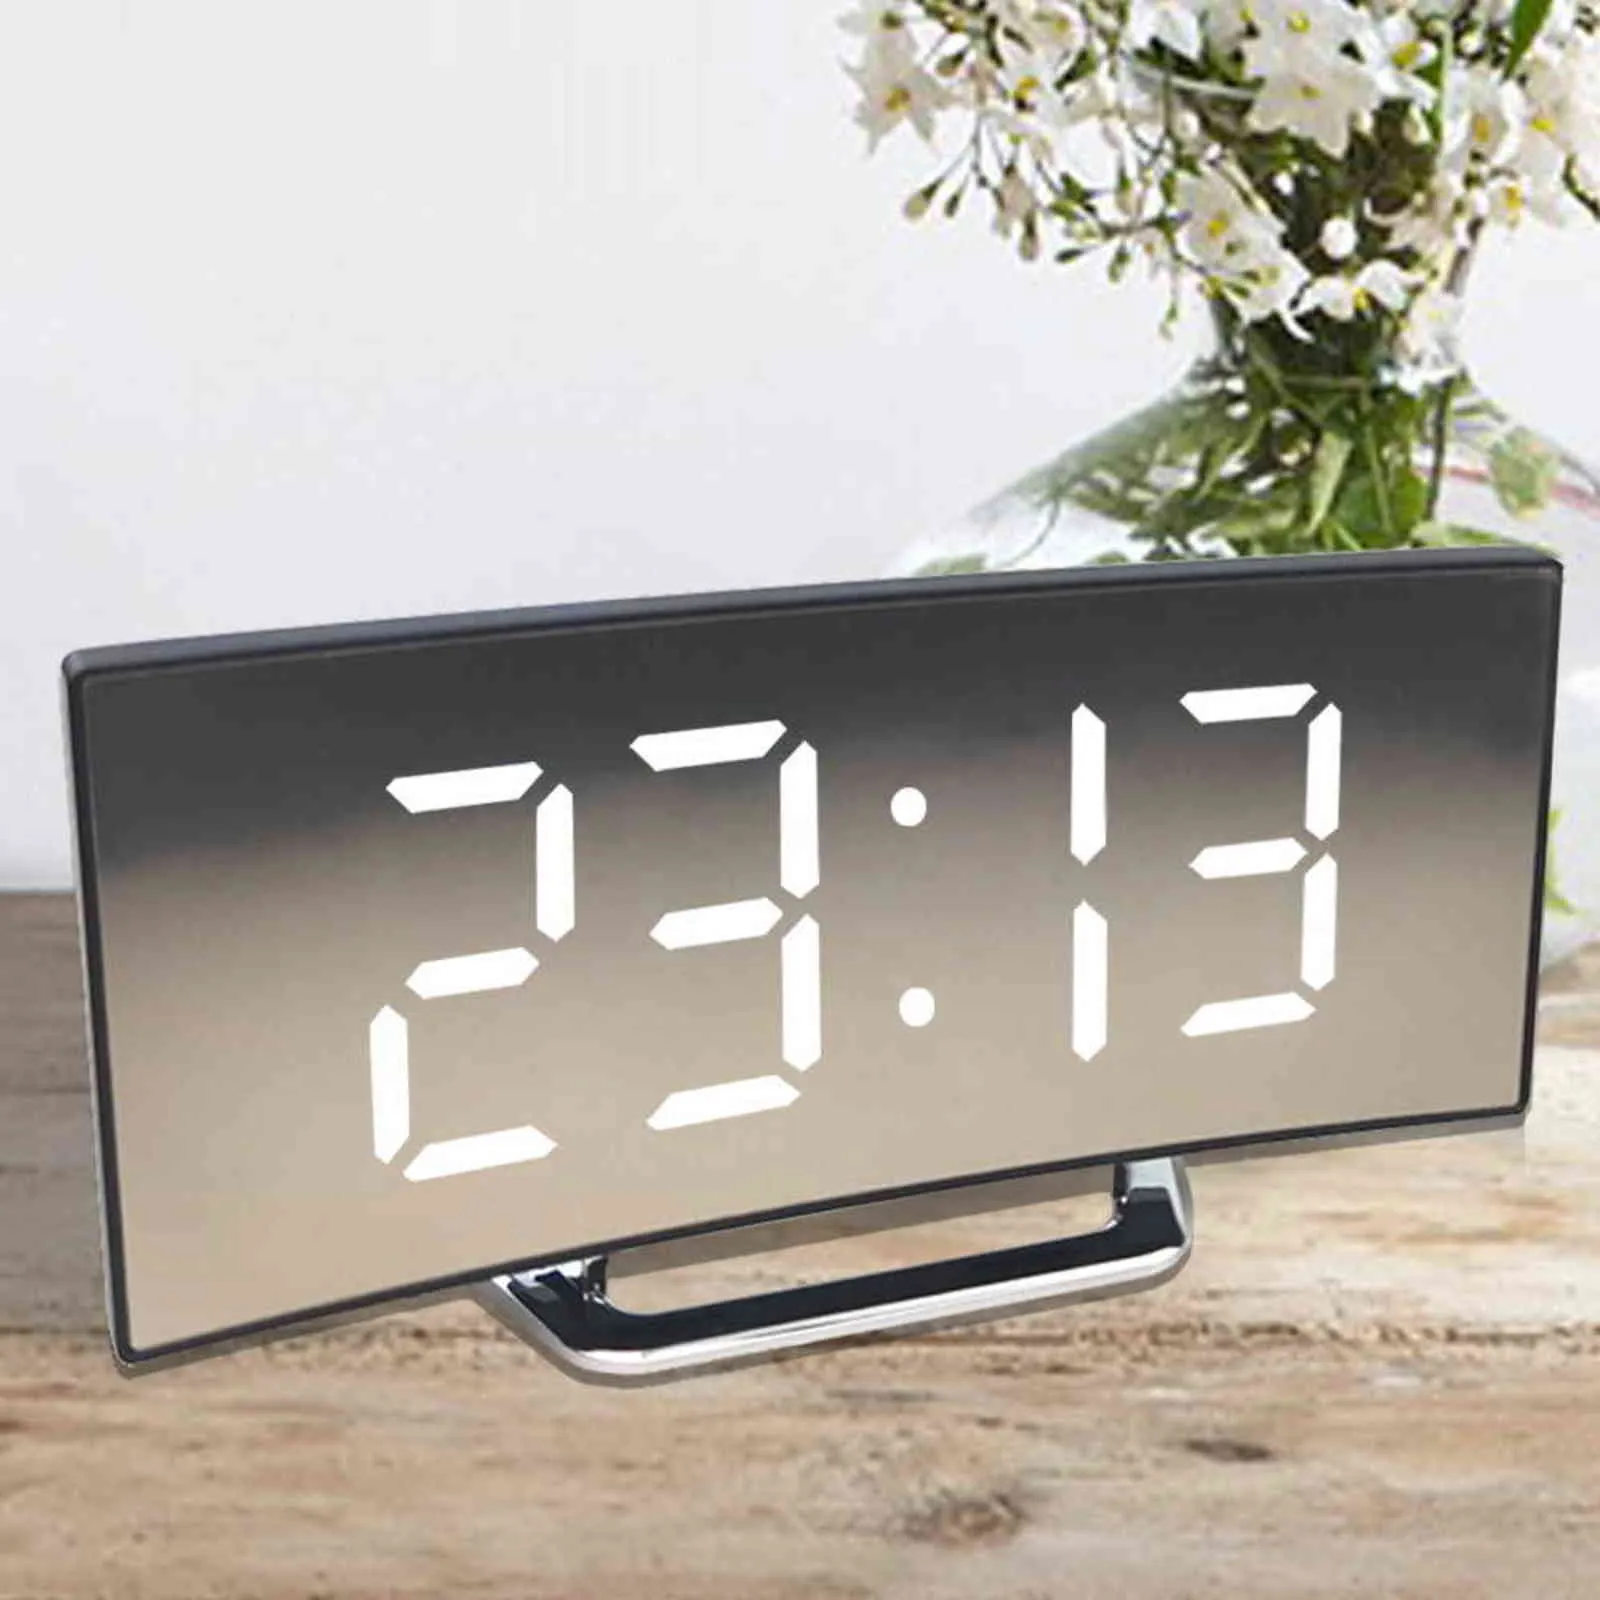 Digital Alarm Clock Desk Table Clock Curved LED Screen Alarm Clocks For Kid Bedroom Temperature Snooze Function Home Decor Watch 211111